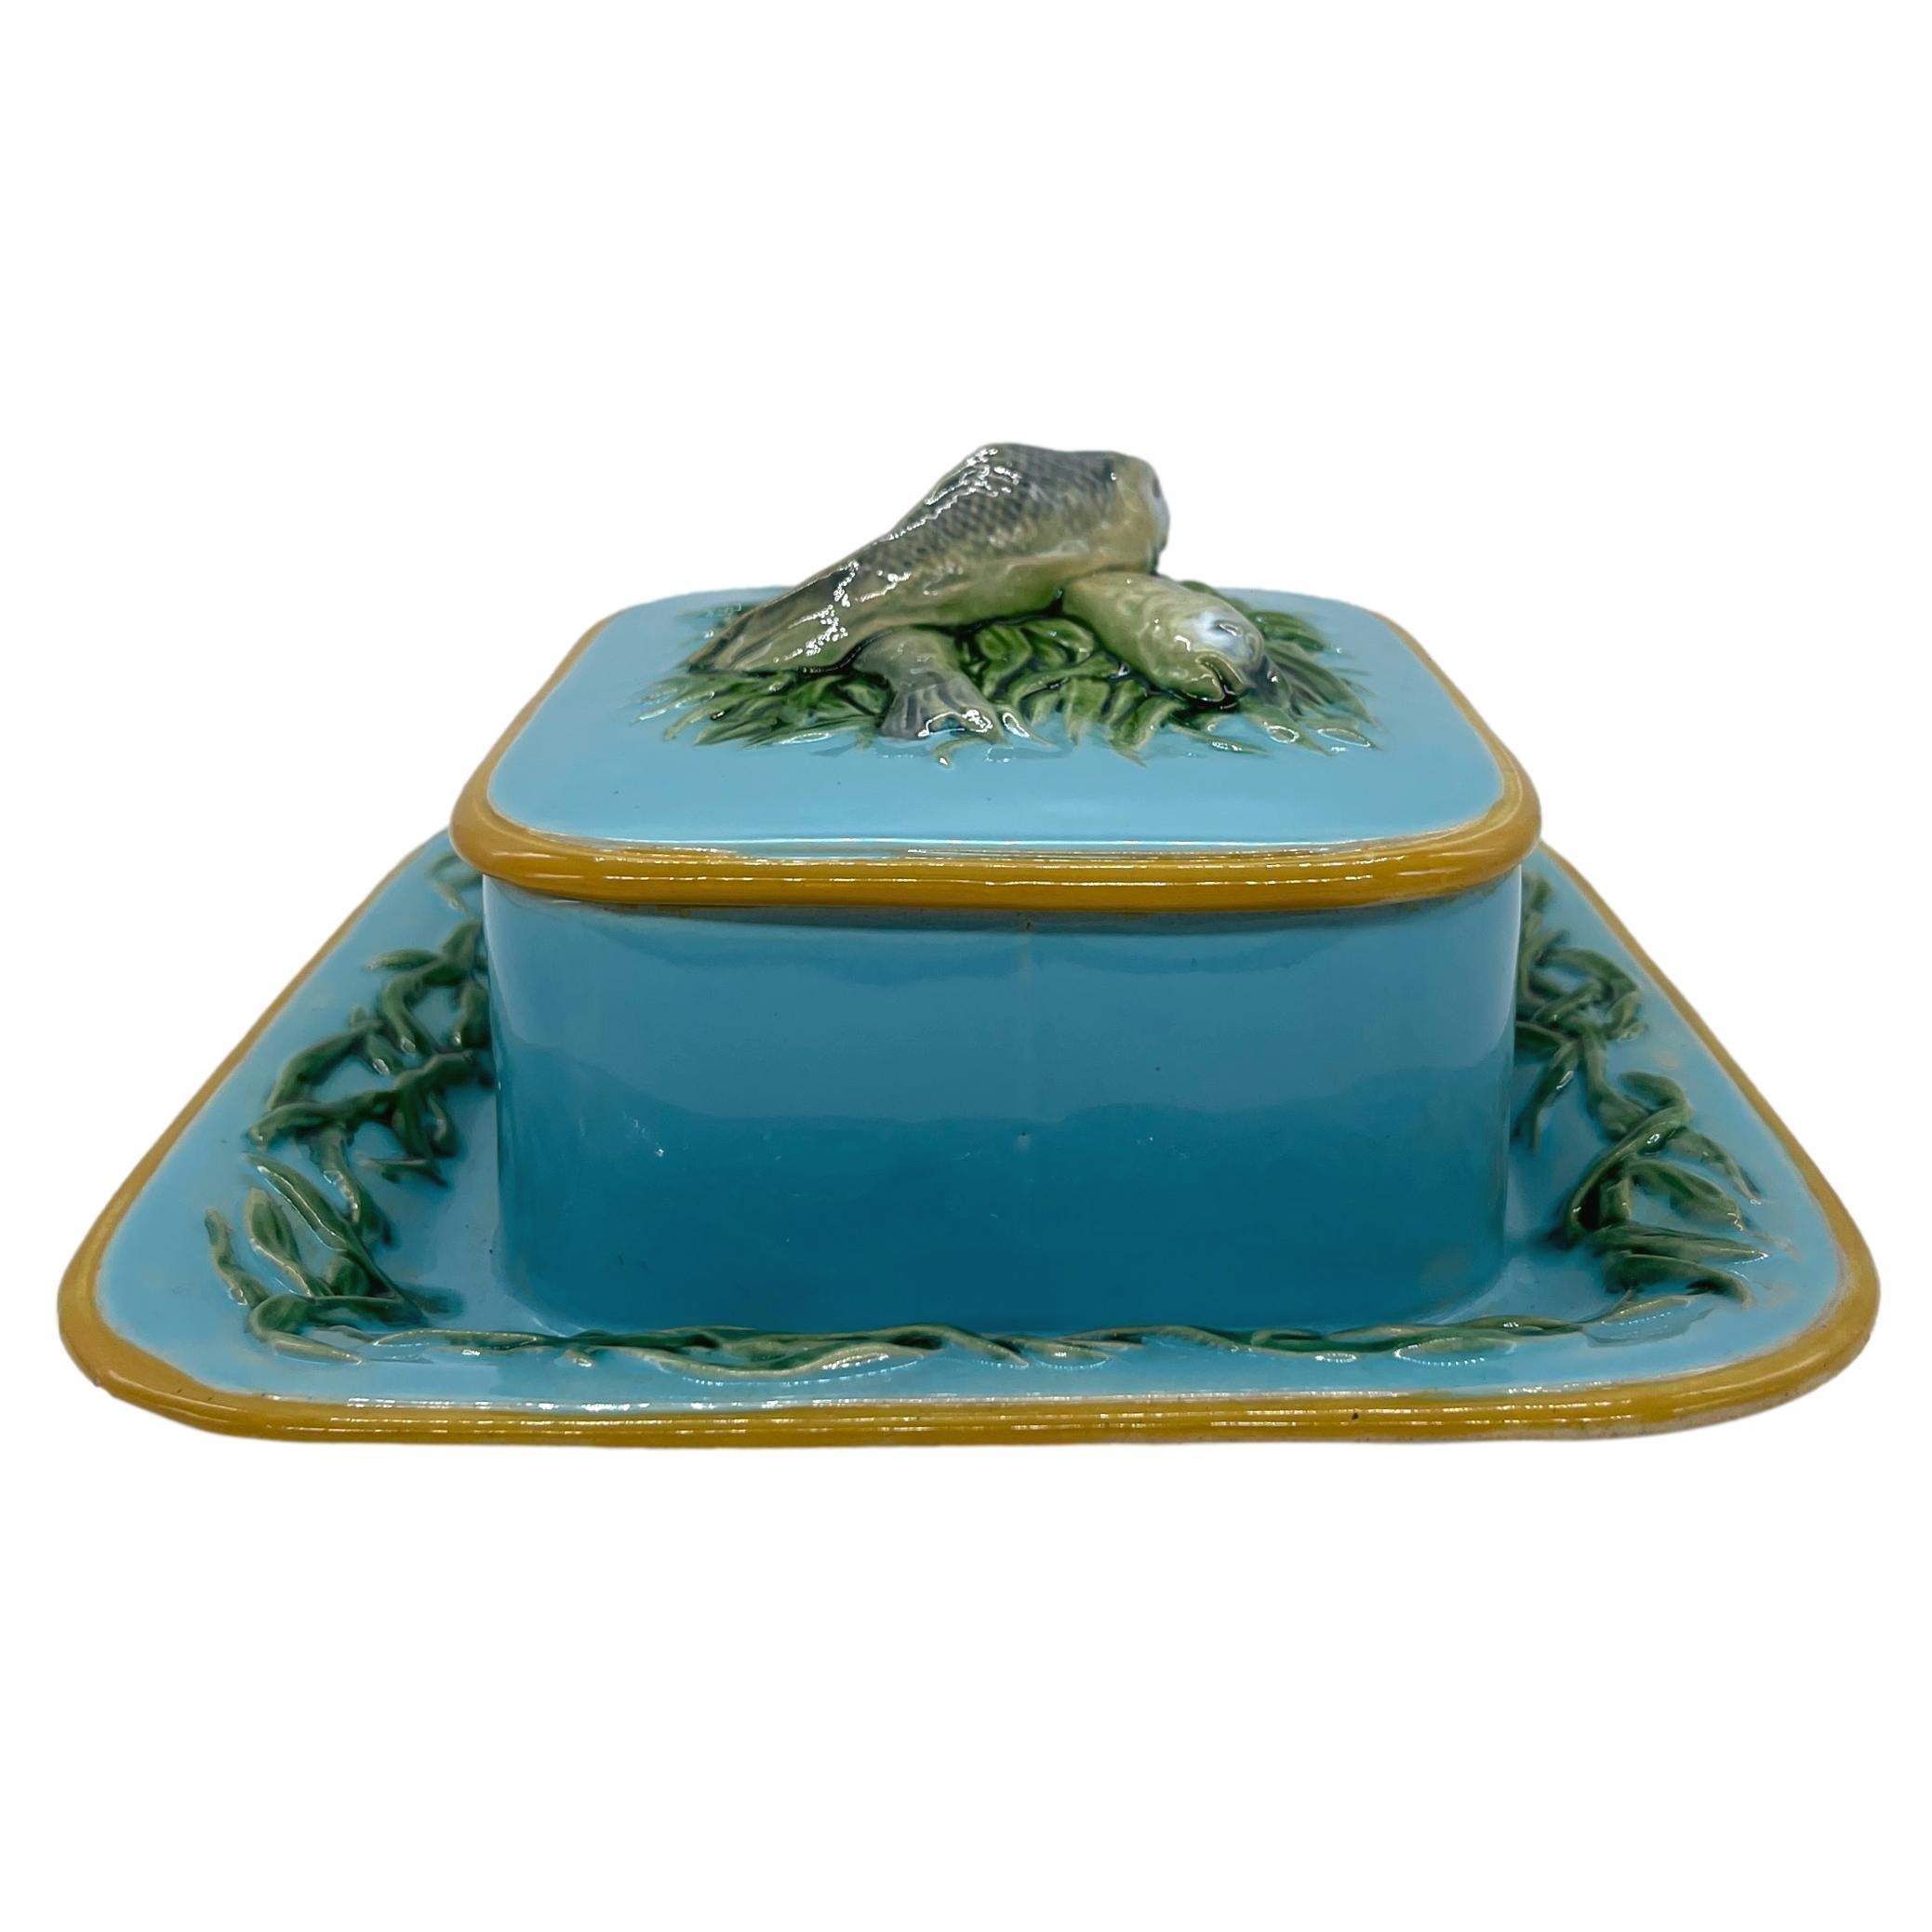 Molded Minton Majolica Turquoise Sardine Box Server with Three Sardines, Dated 1876